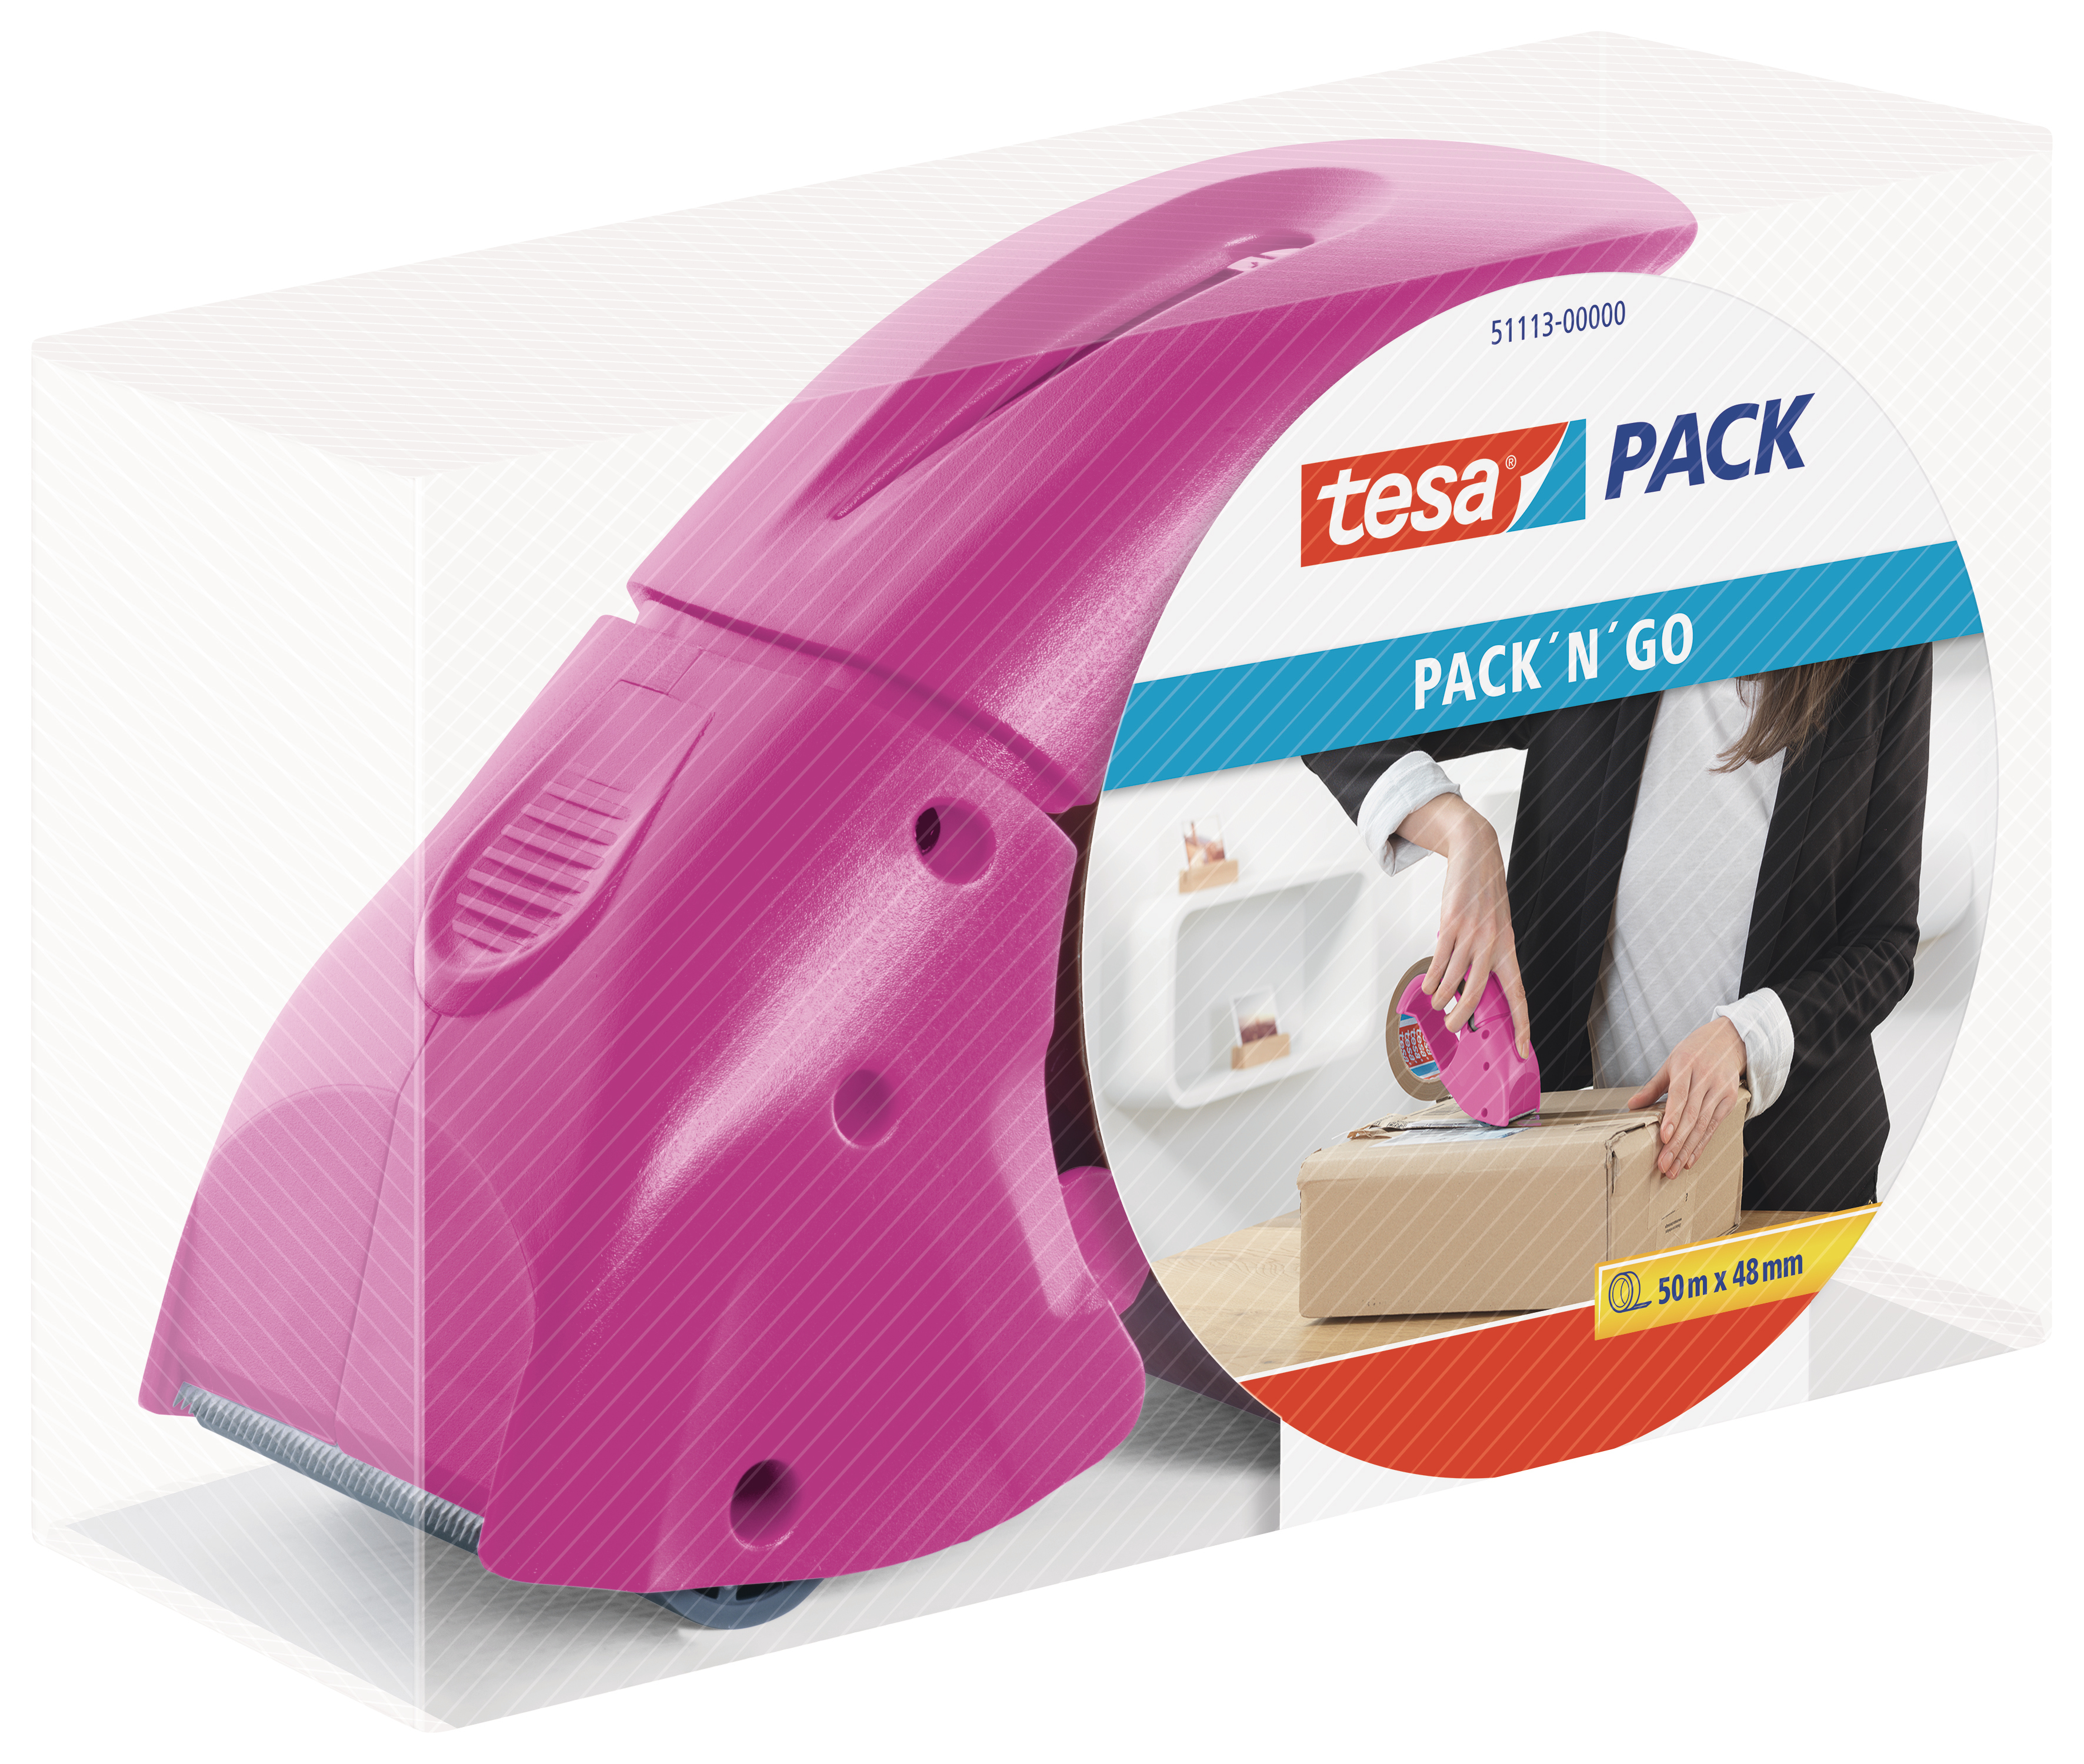 TESA Pack Dispenser 66mx50mm 511130000 Pack'n'go pink Pack'n'go pink